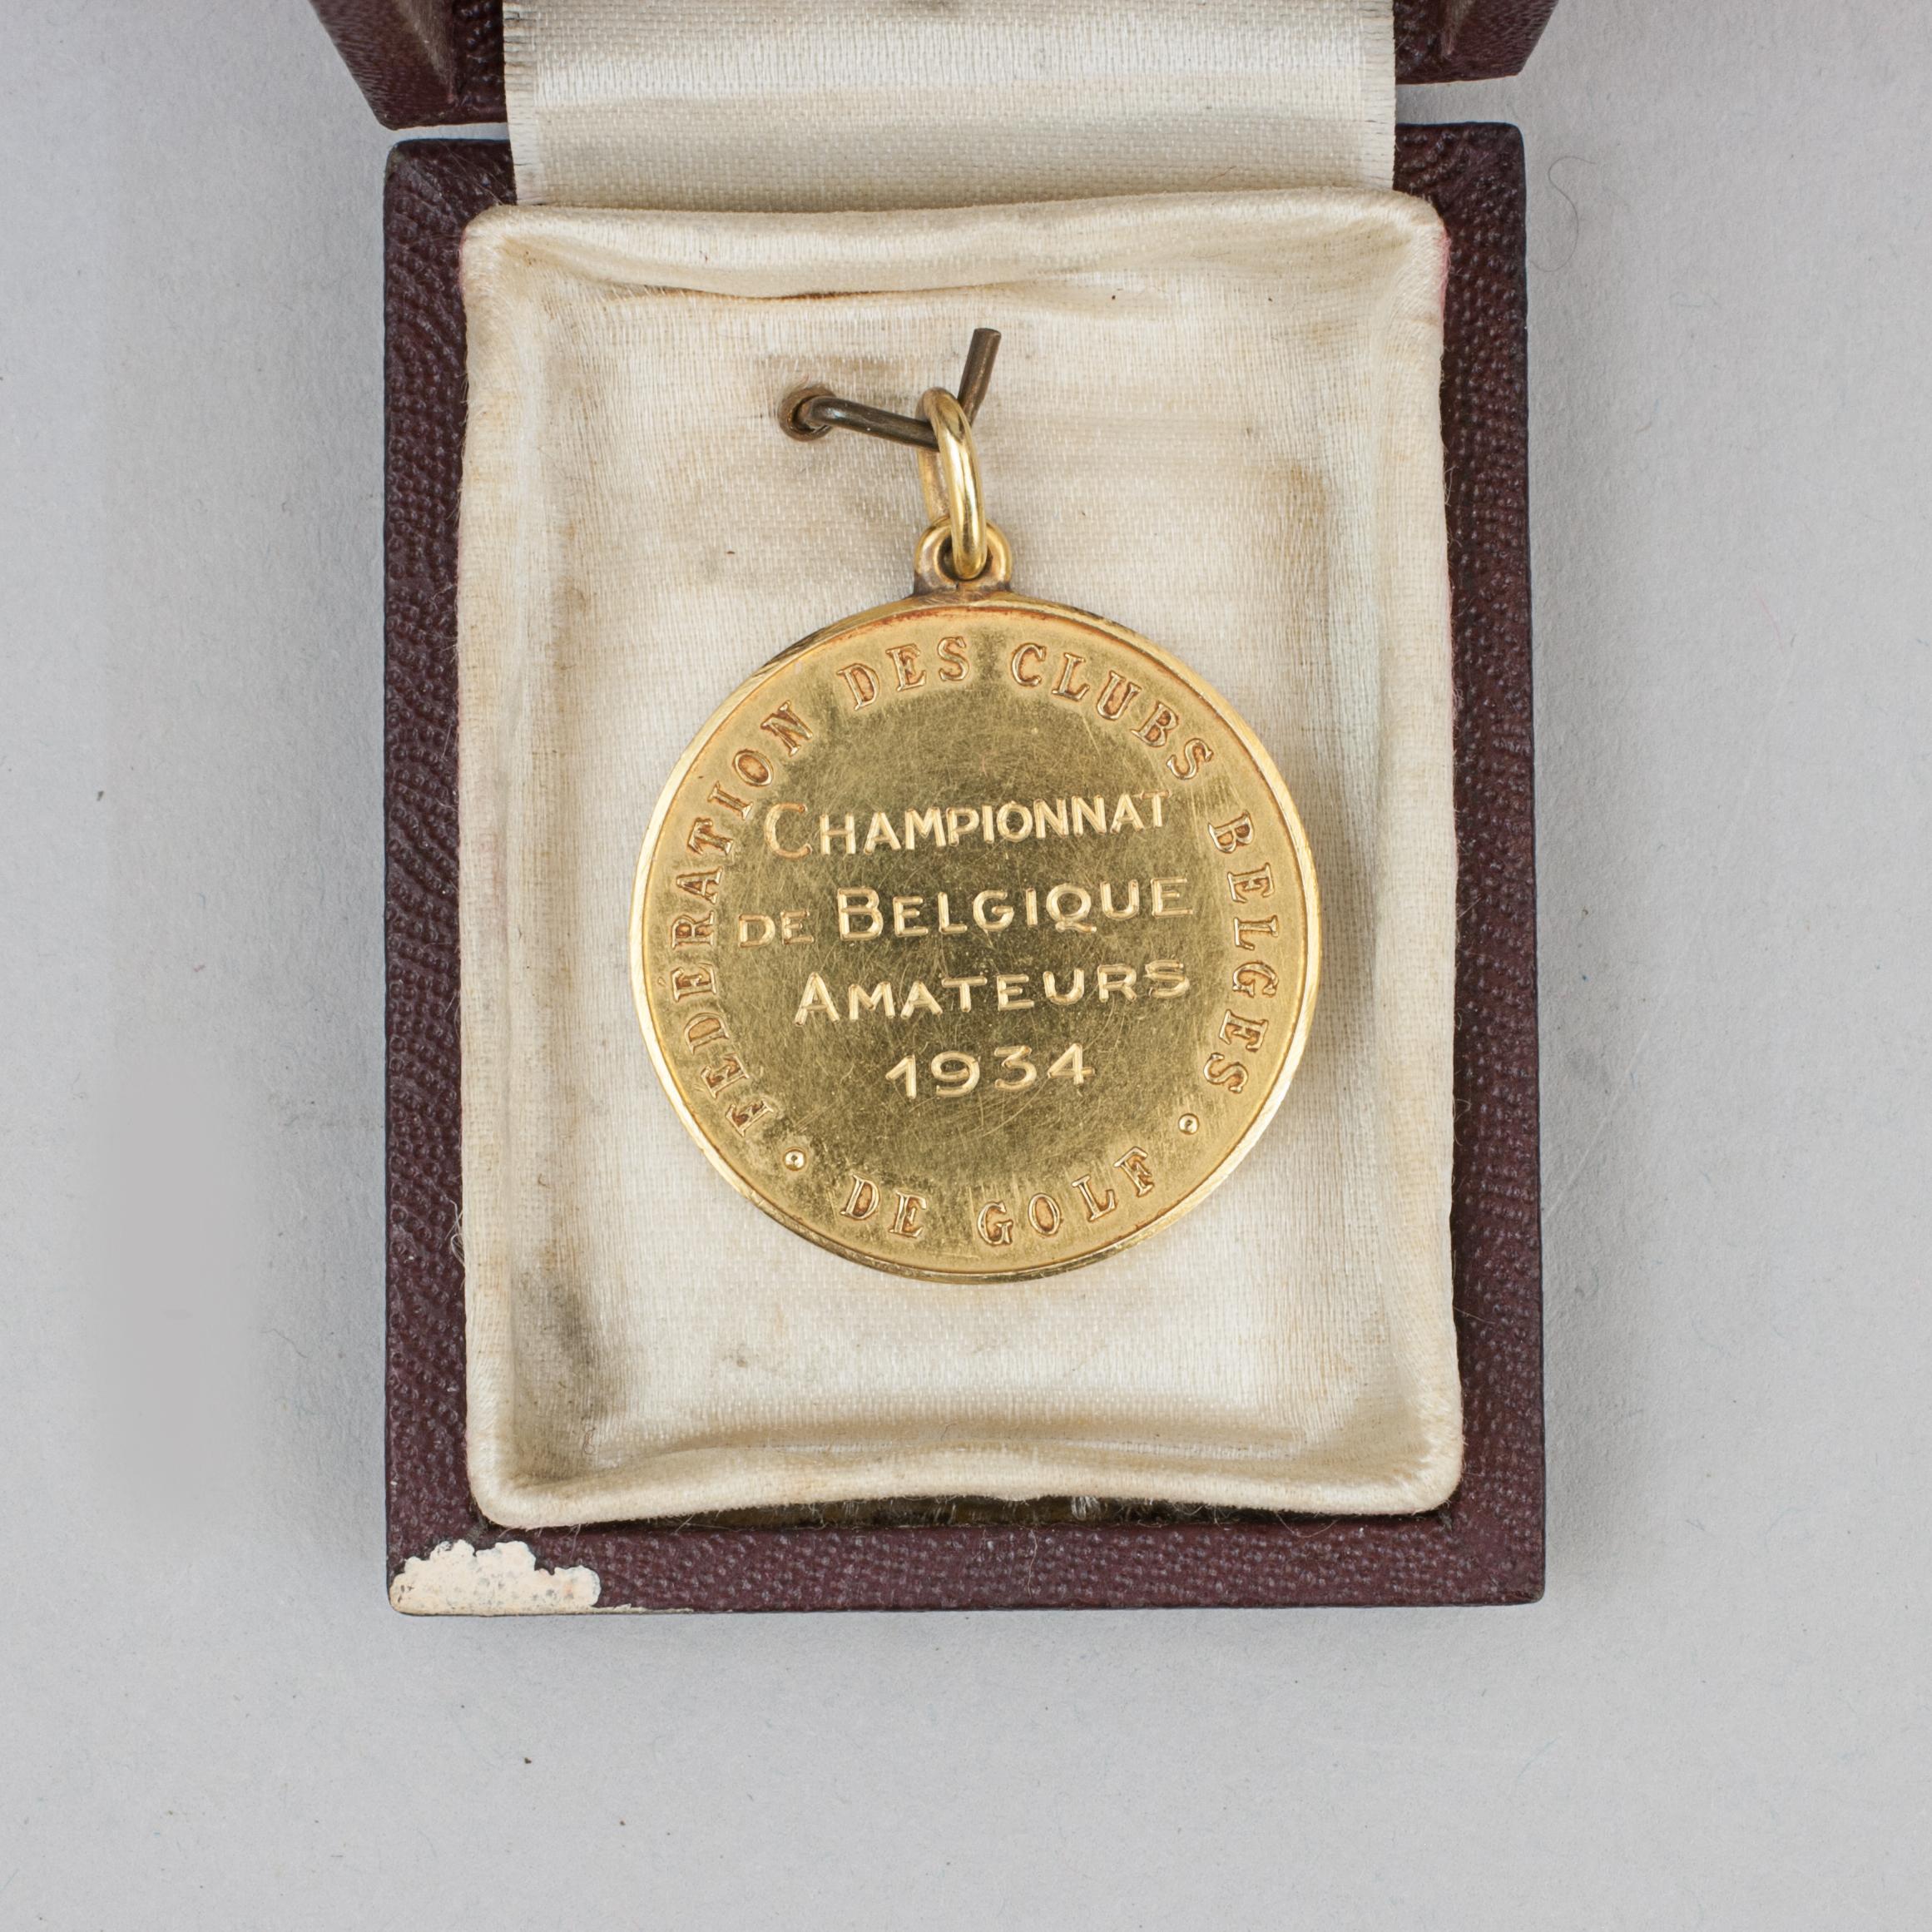 Belge Golf, Amateur Gold Medal 1934 Belgium Open Championship en vente